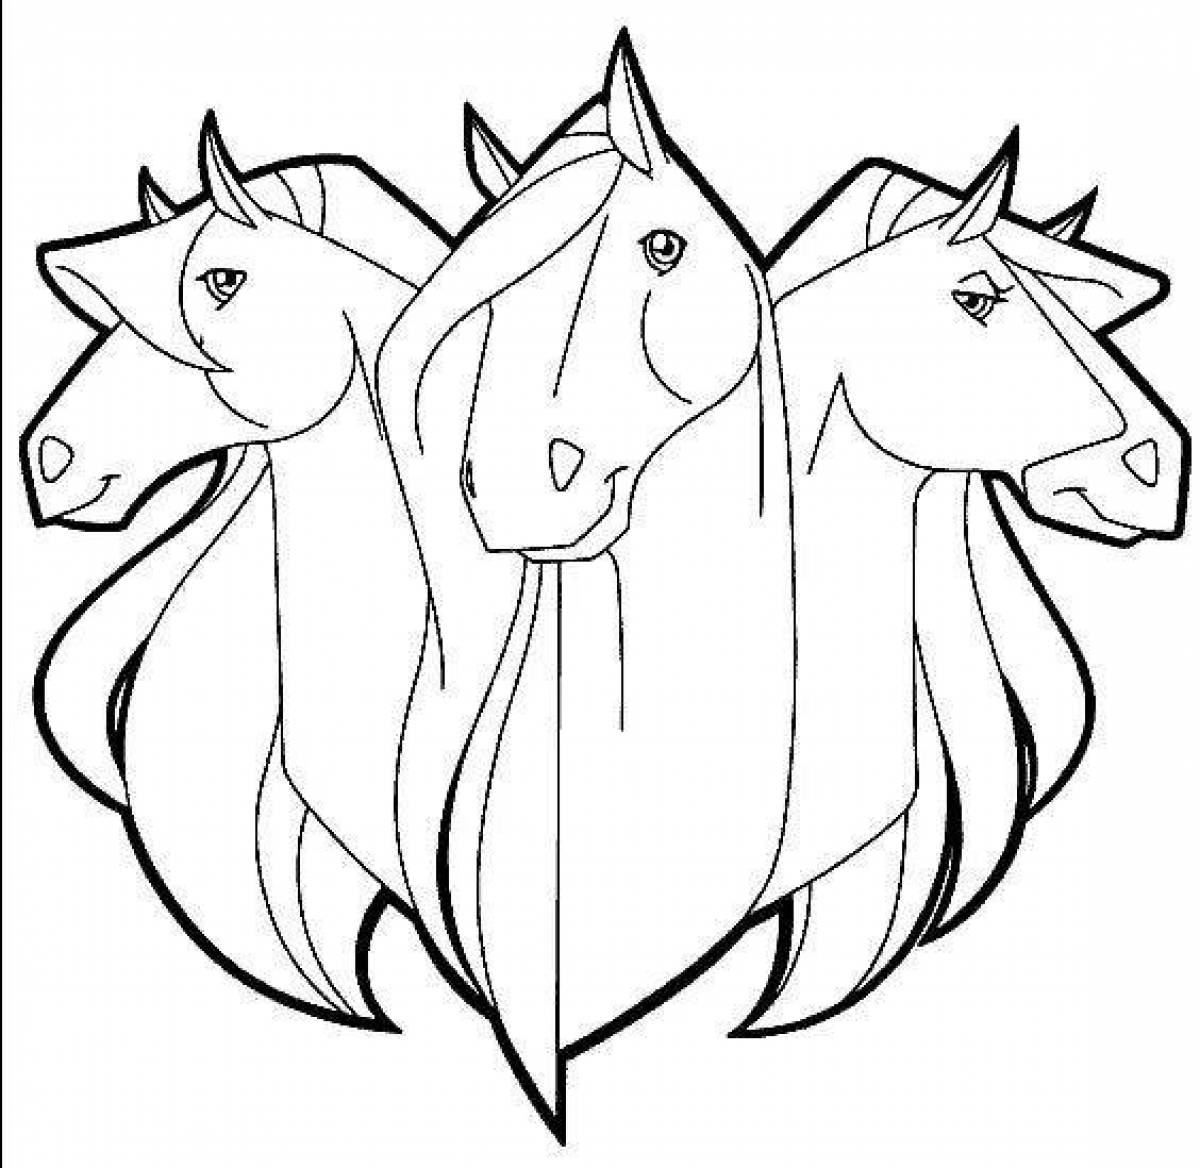 Three white horses #10